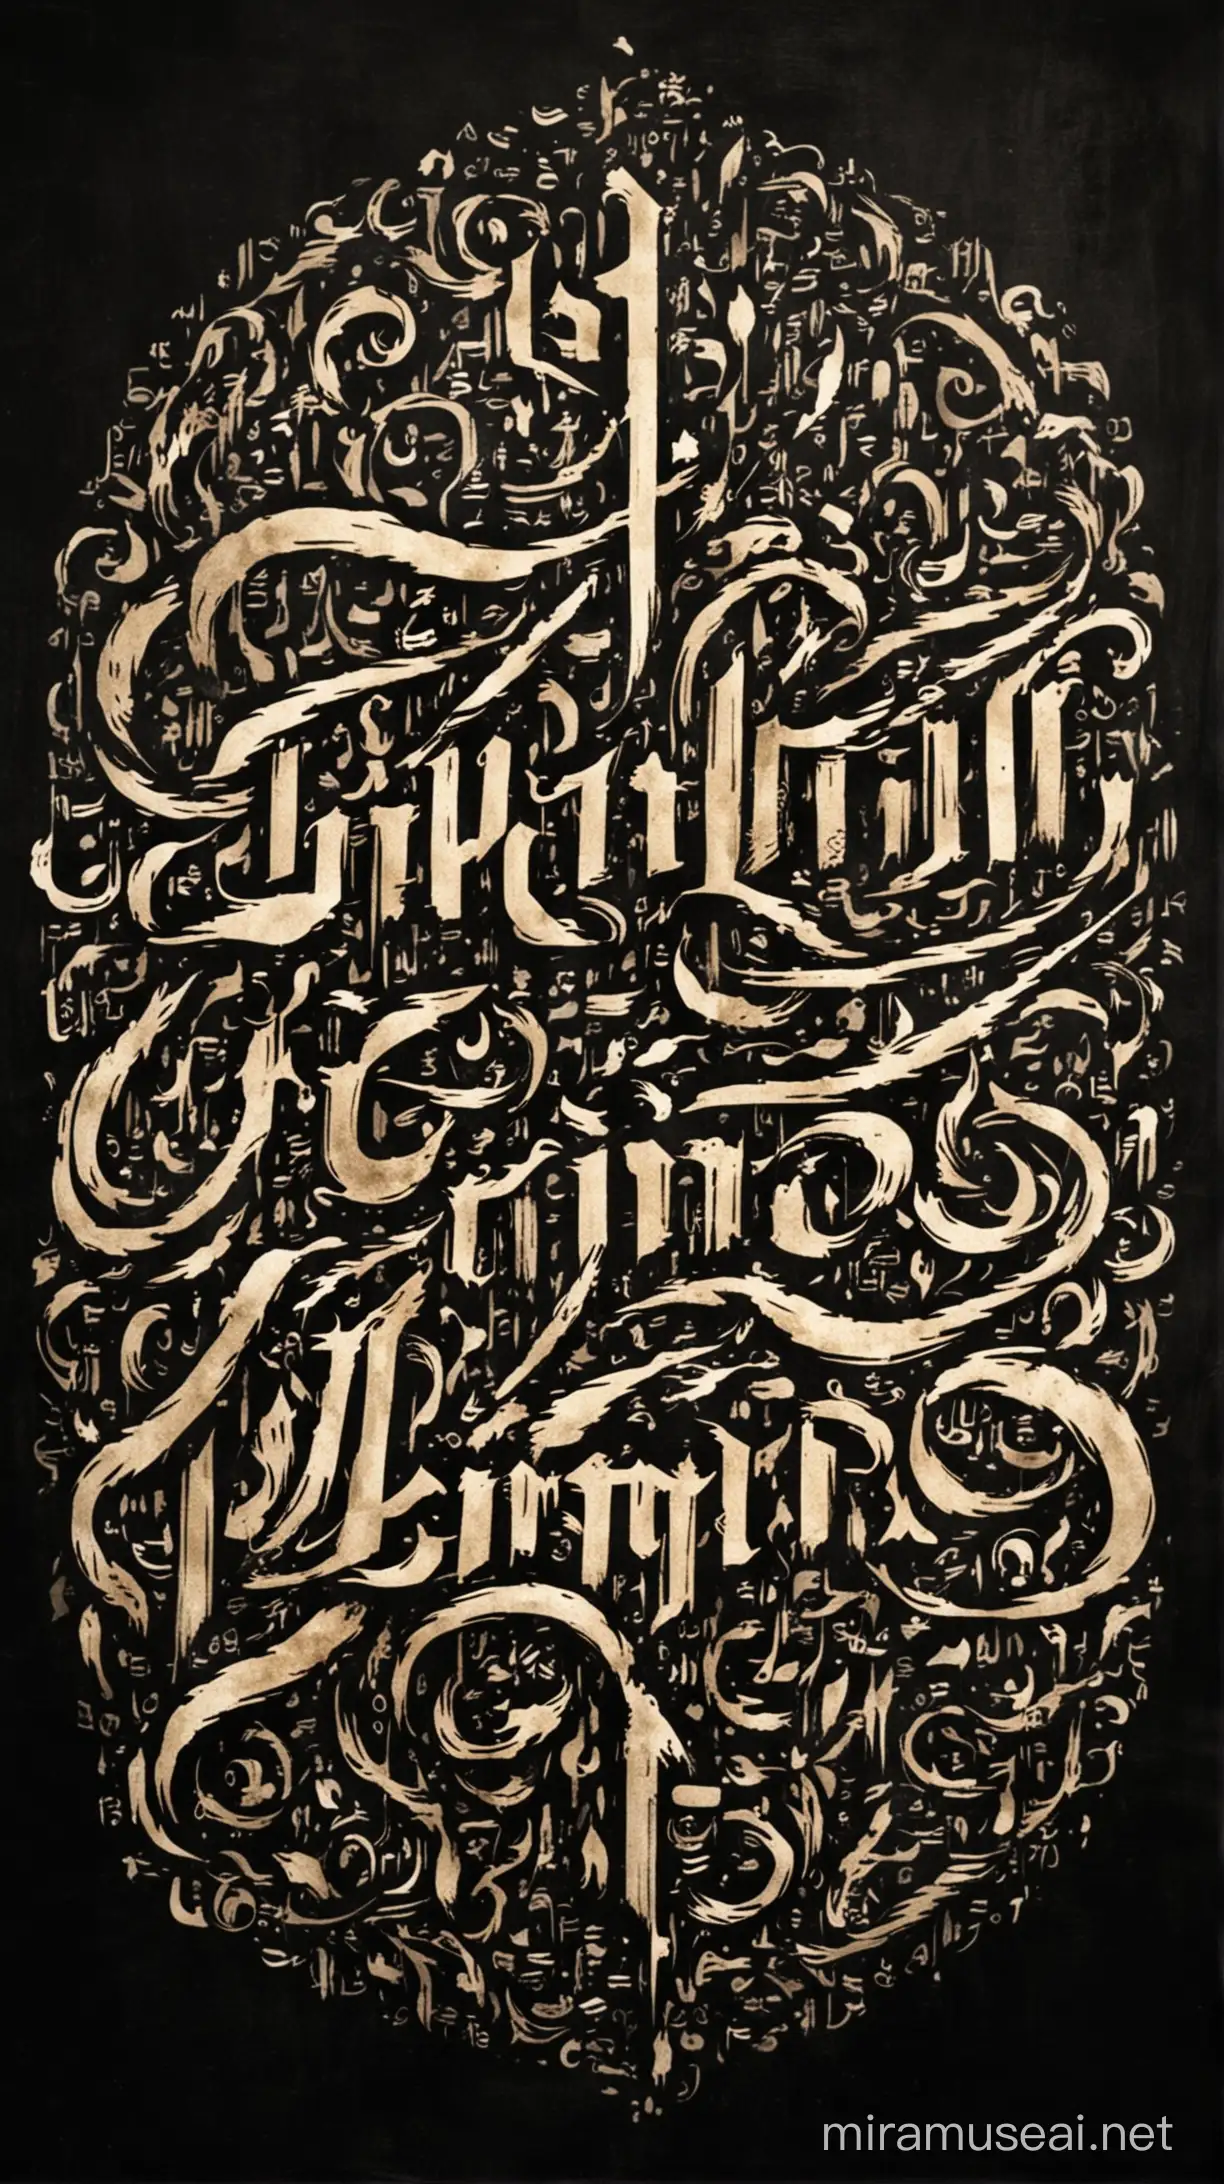 Elegant Calligraphy Art by Pokras Lampas in Dark Ambiance